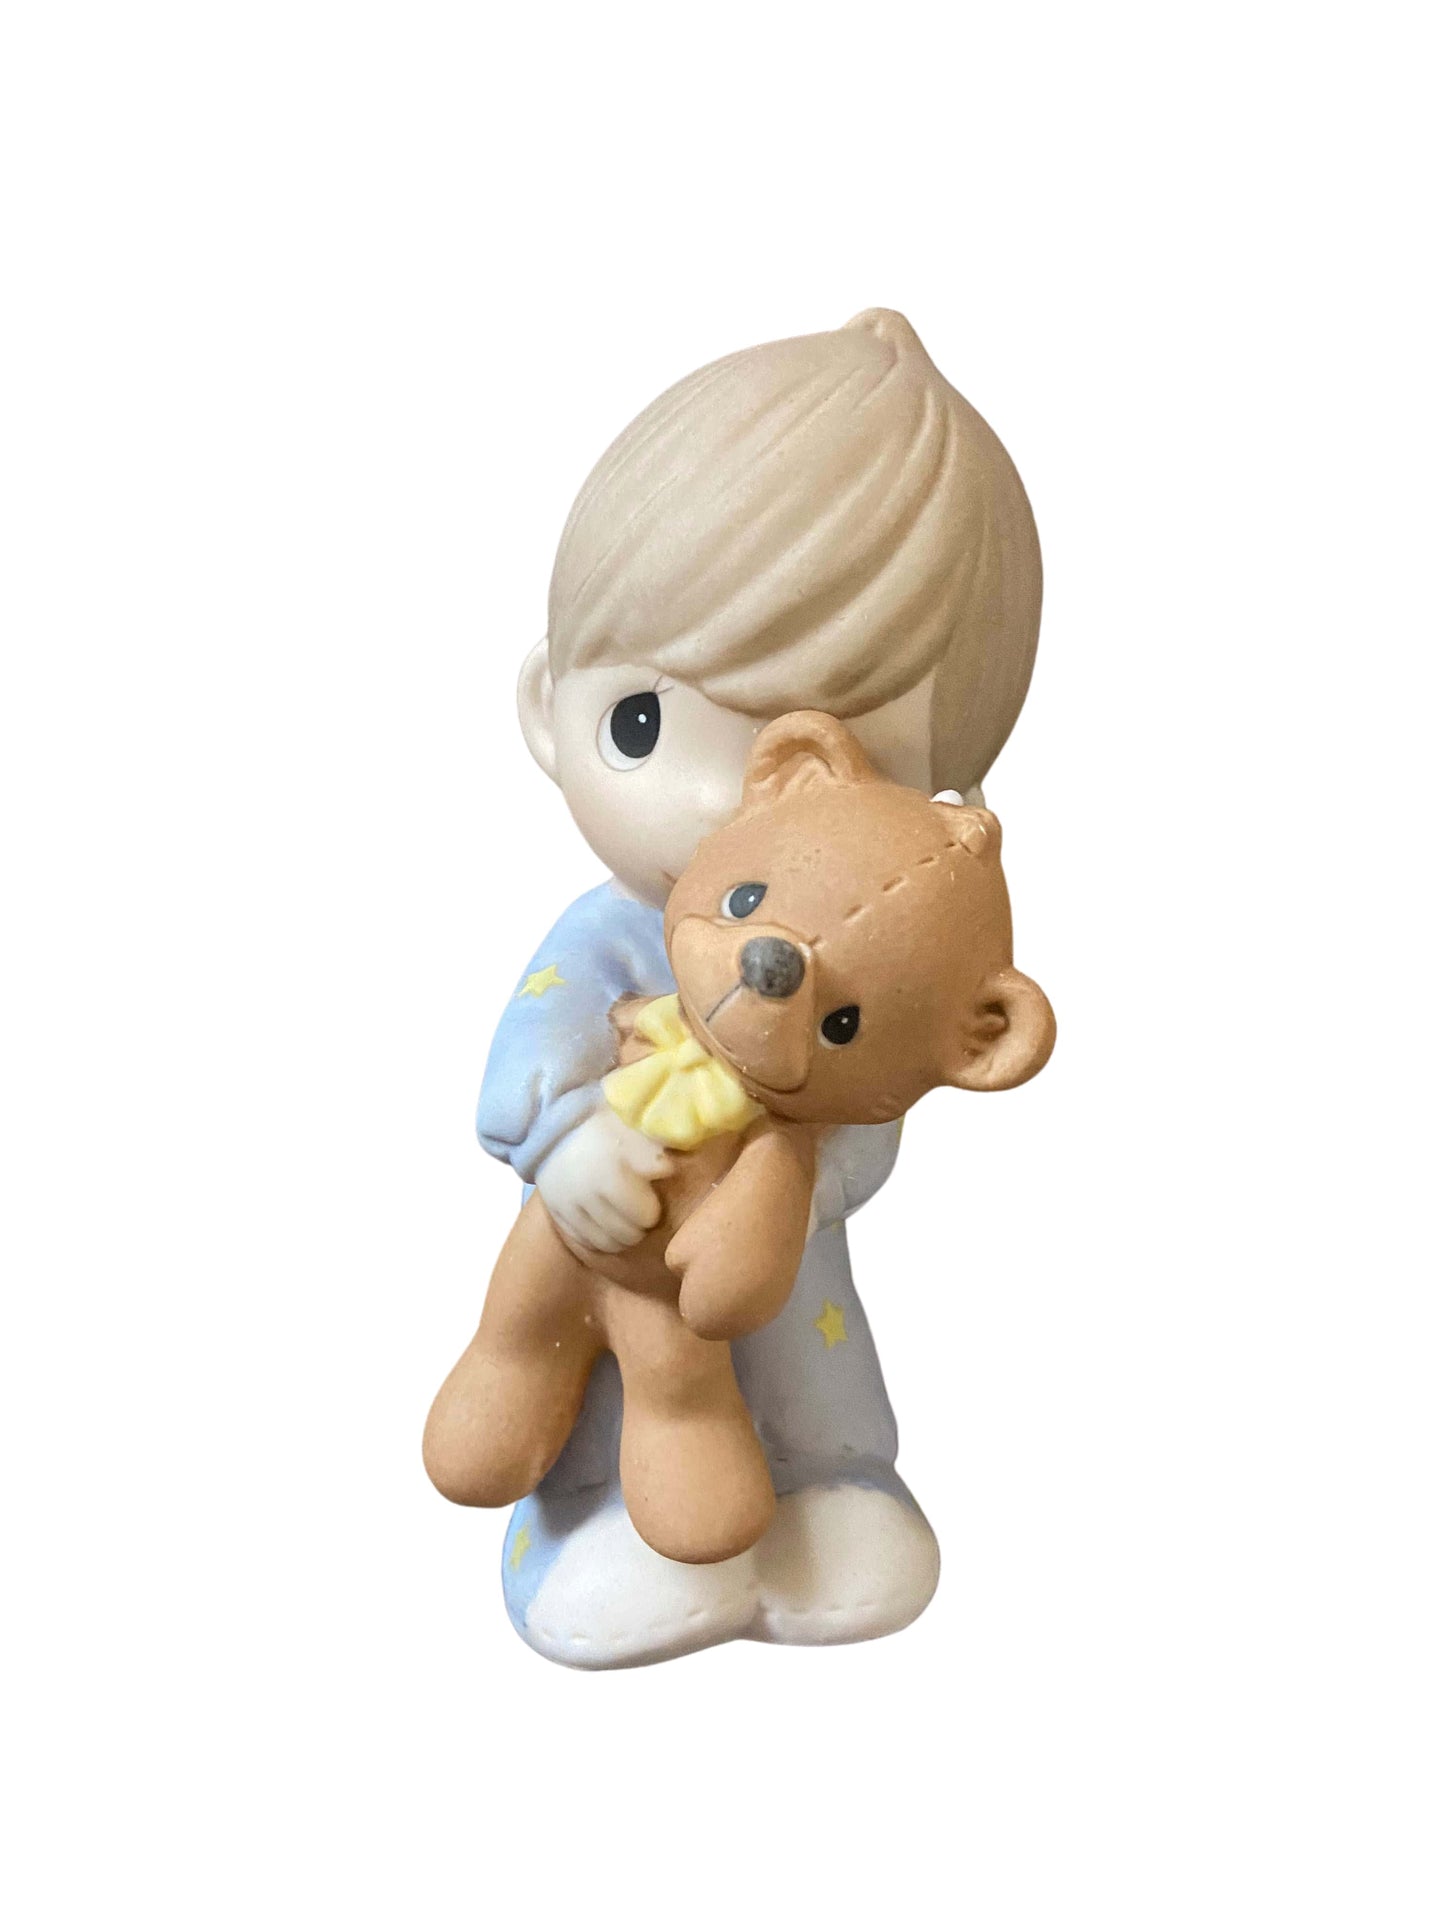 VEEP: Gary's Precious Moments "Jesus Loves Me" Porcelain Figurine